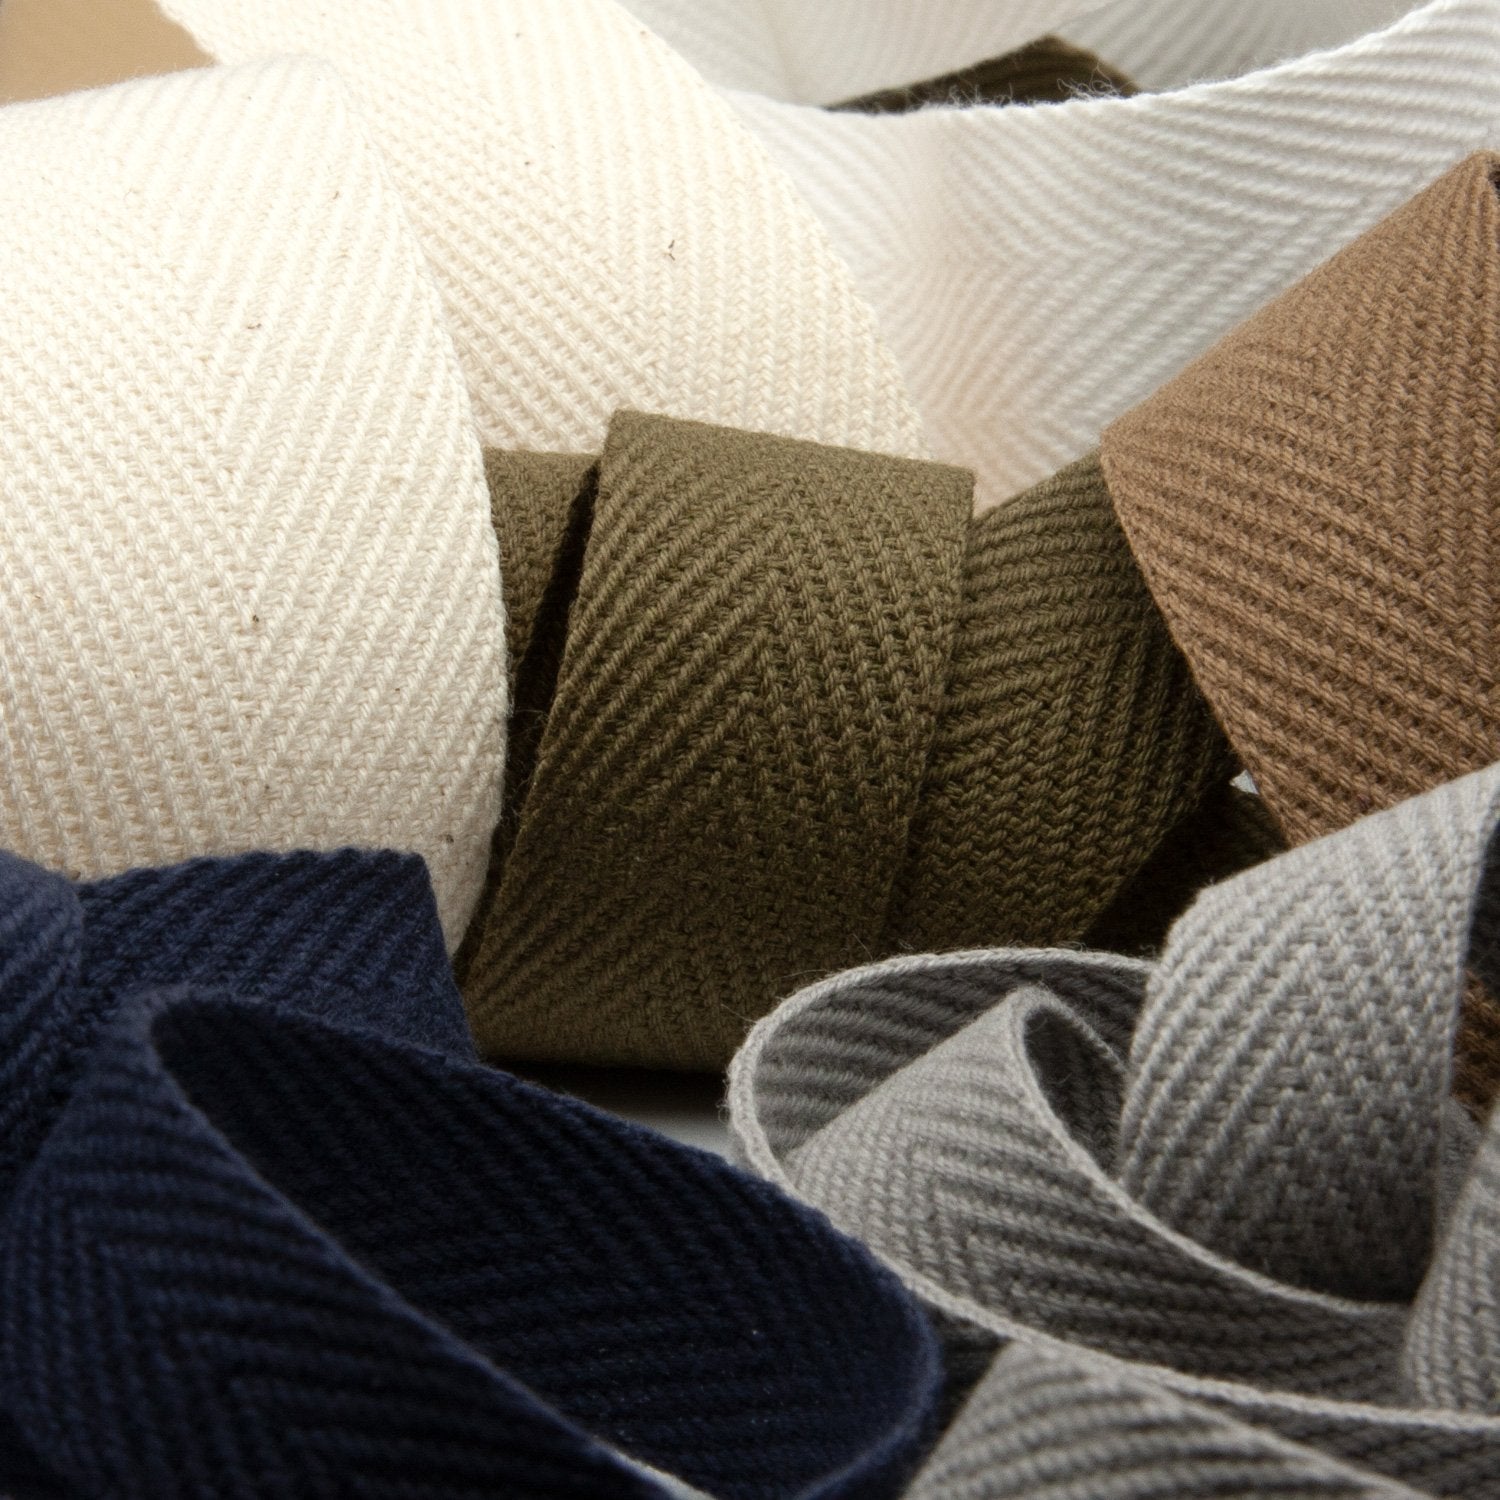 FUJIYAMA RIBBON [Wholesale] Thick Cotton Herringbone Ribbon 10mm 50 Meters Roll White